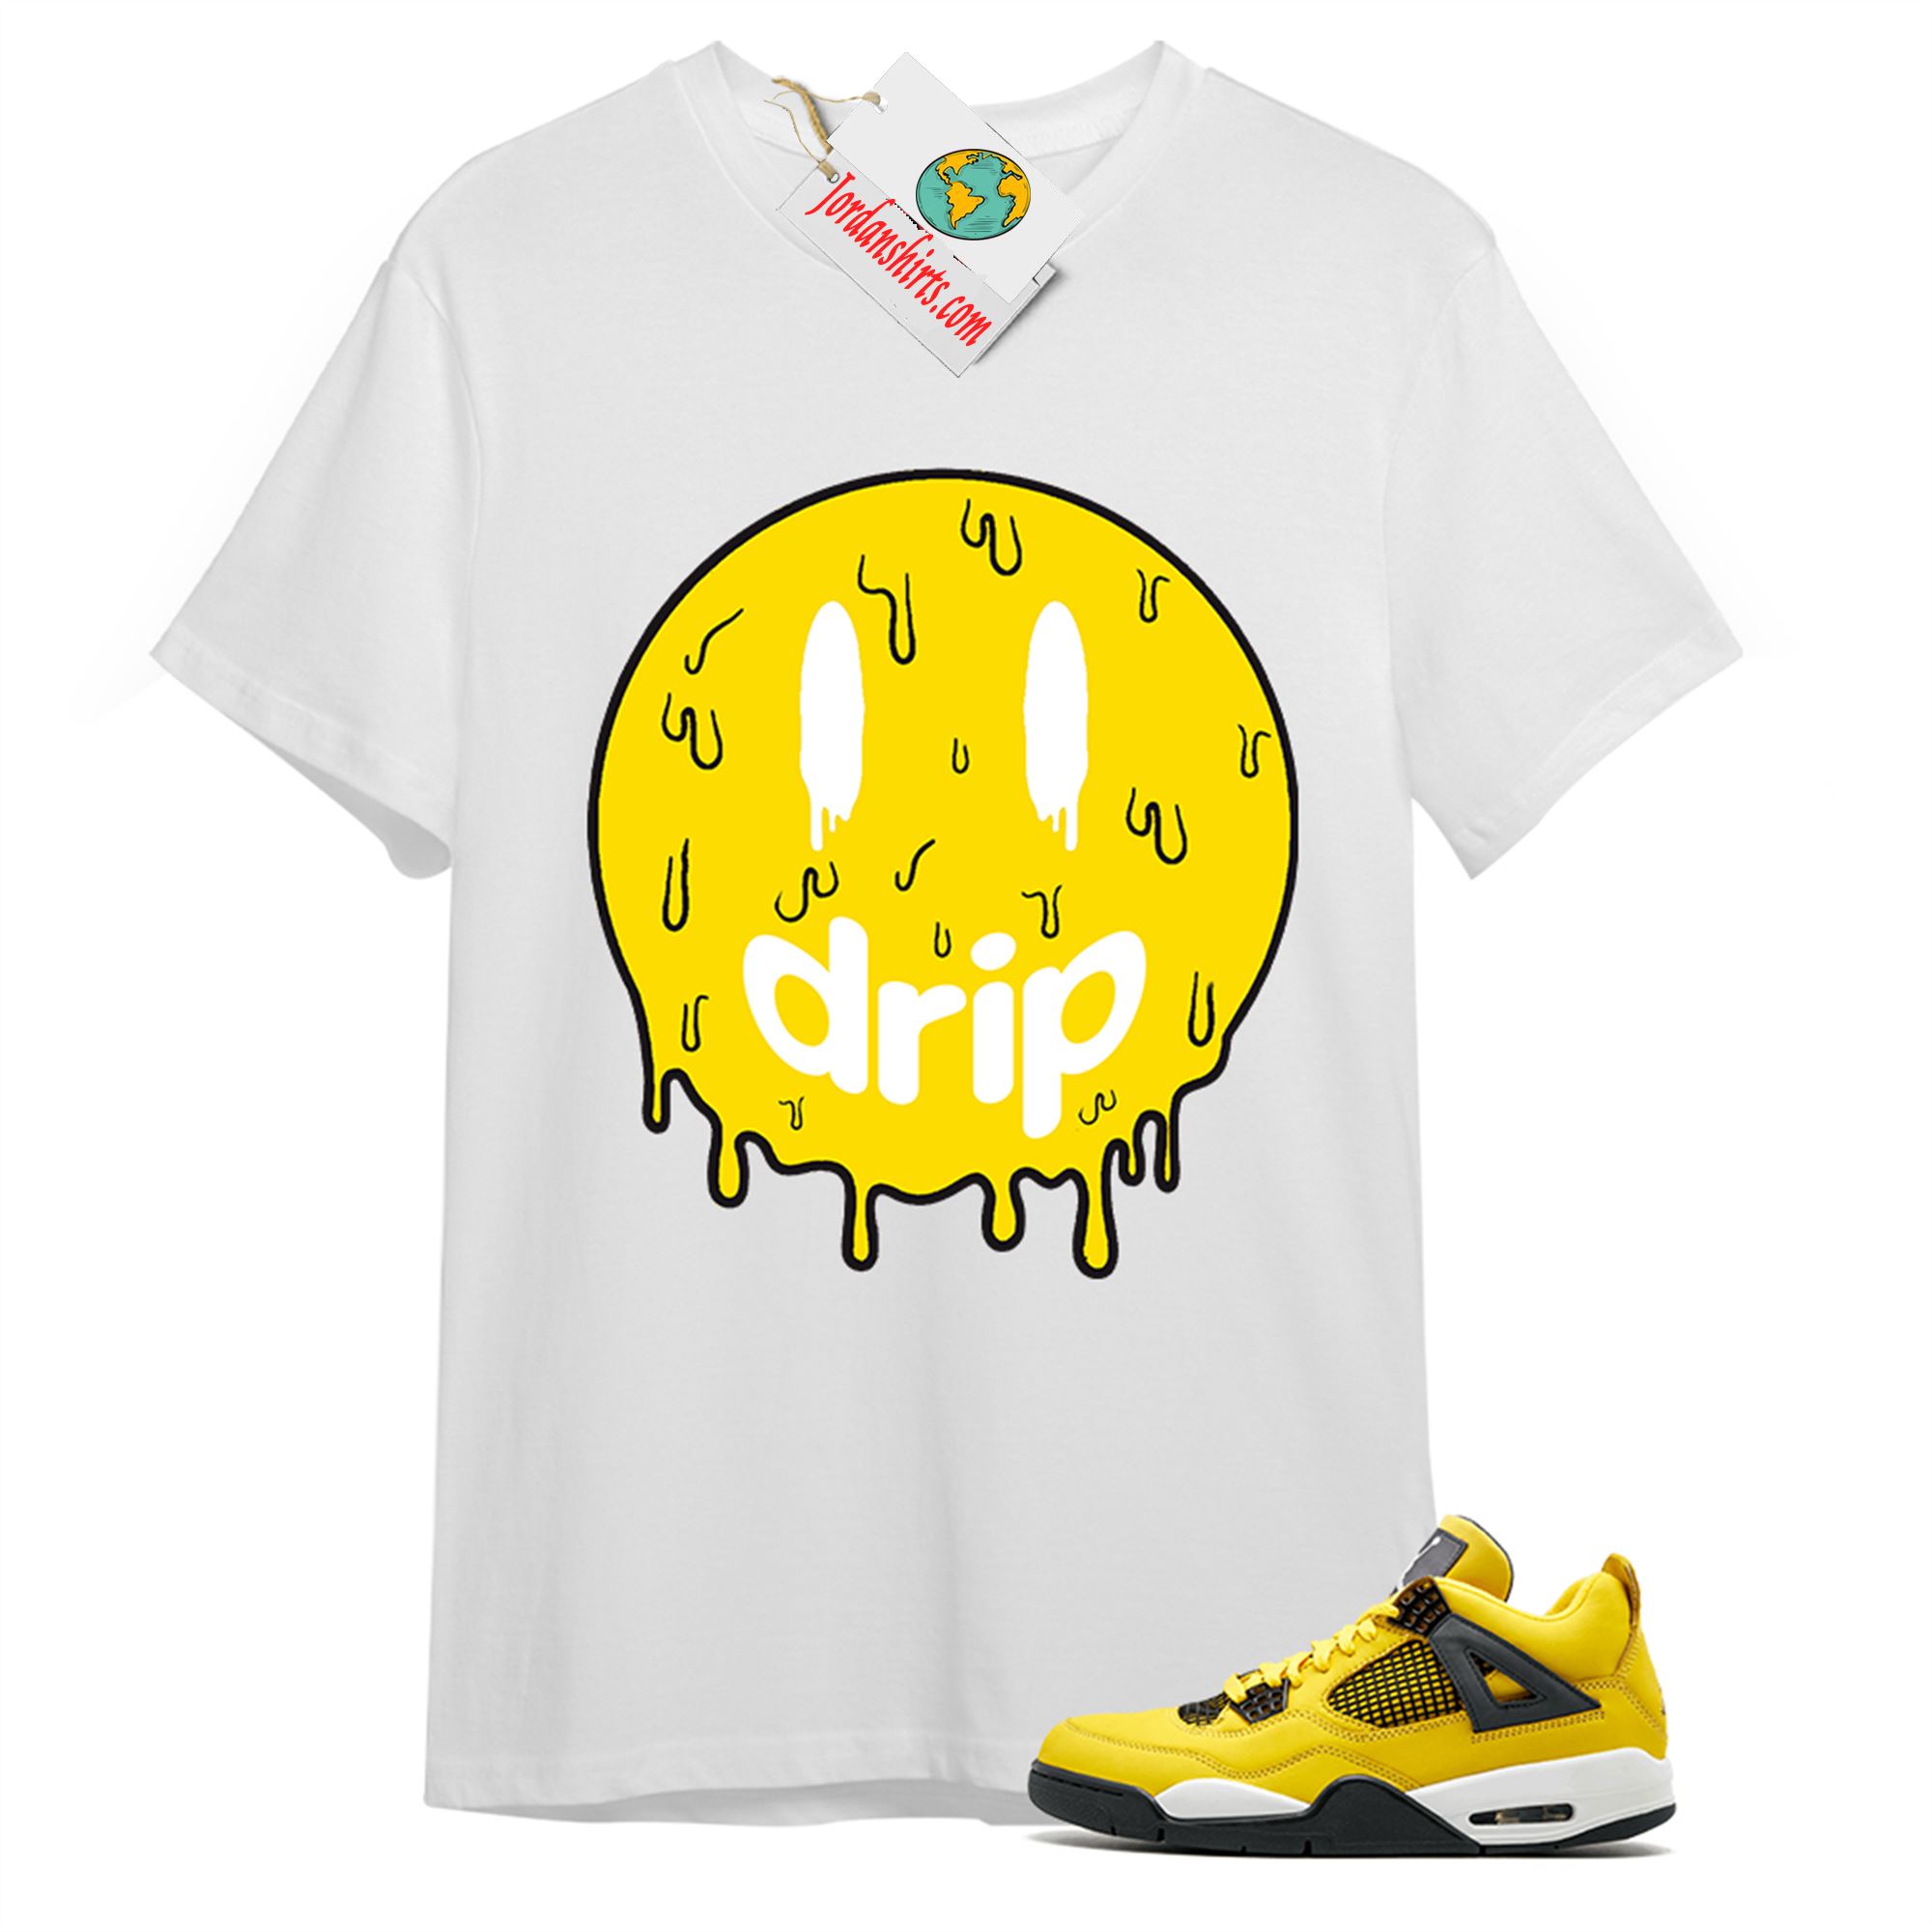 Jordan 4 Shirt, Drip White T-shirt Air Jordan 4 Tour Yellow Lightning 4s Full Size Up To 5xl